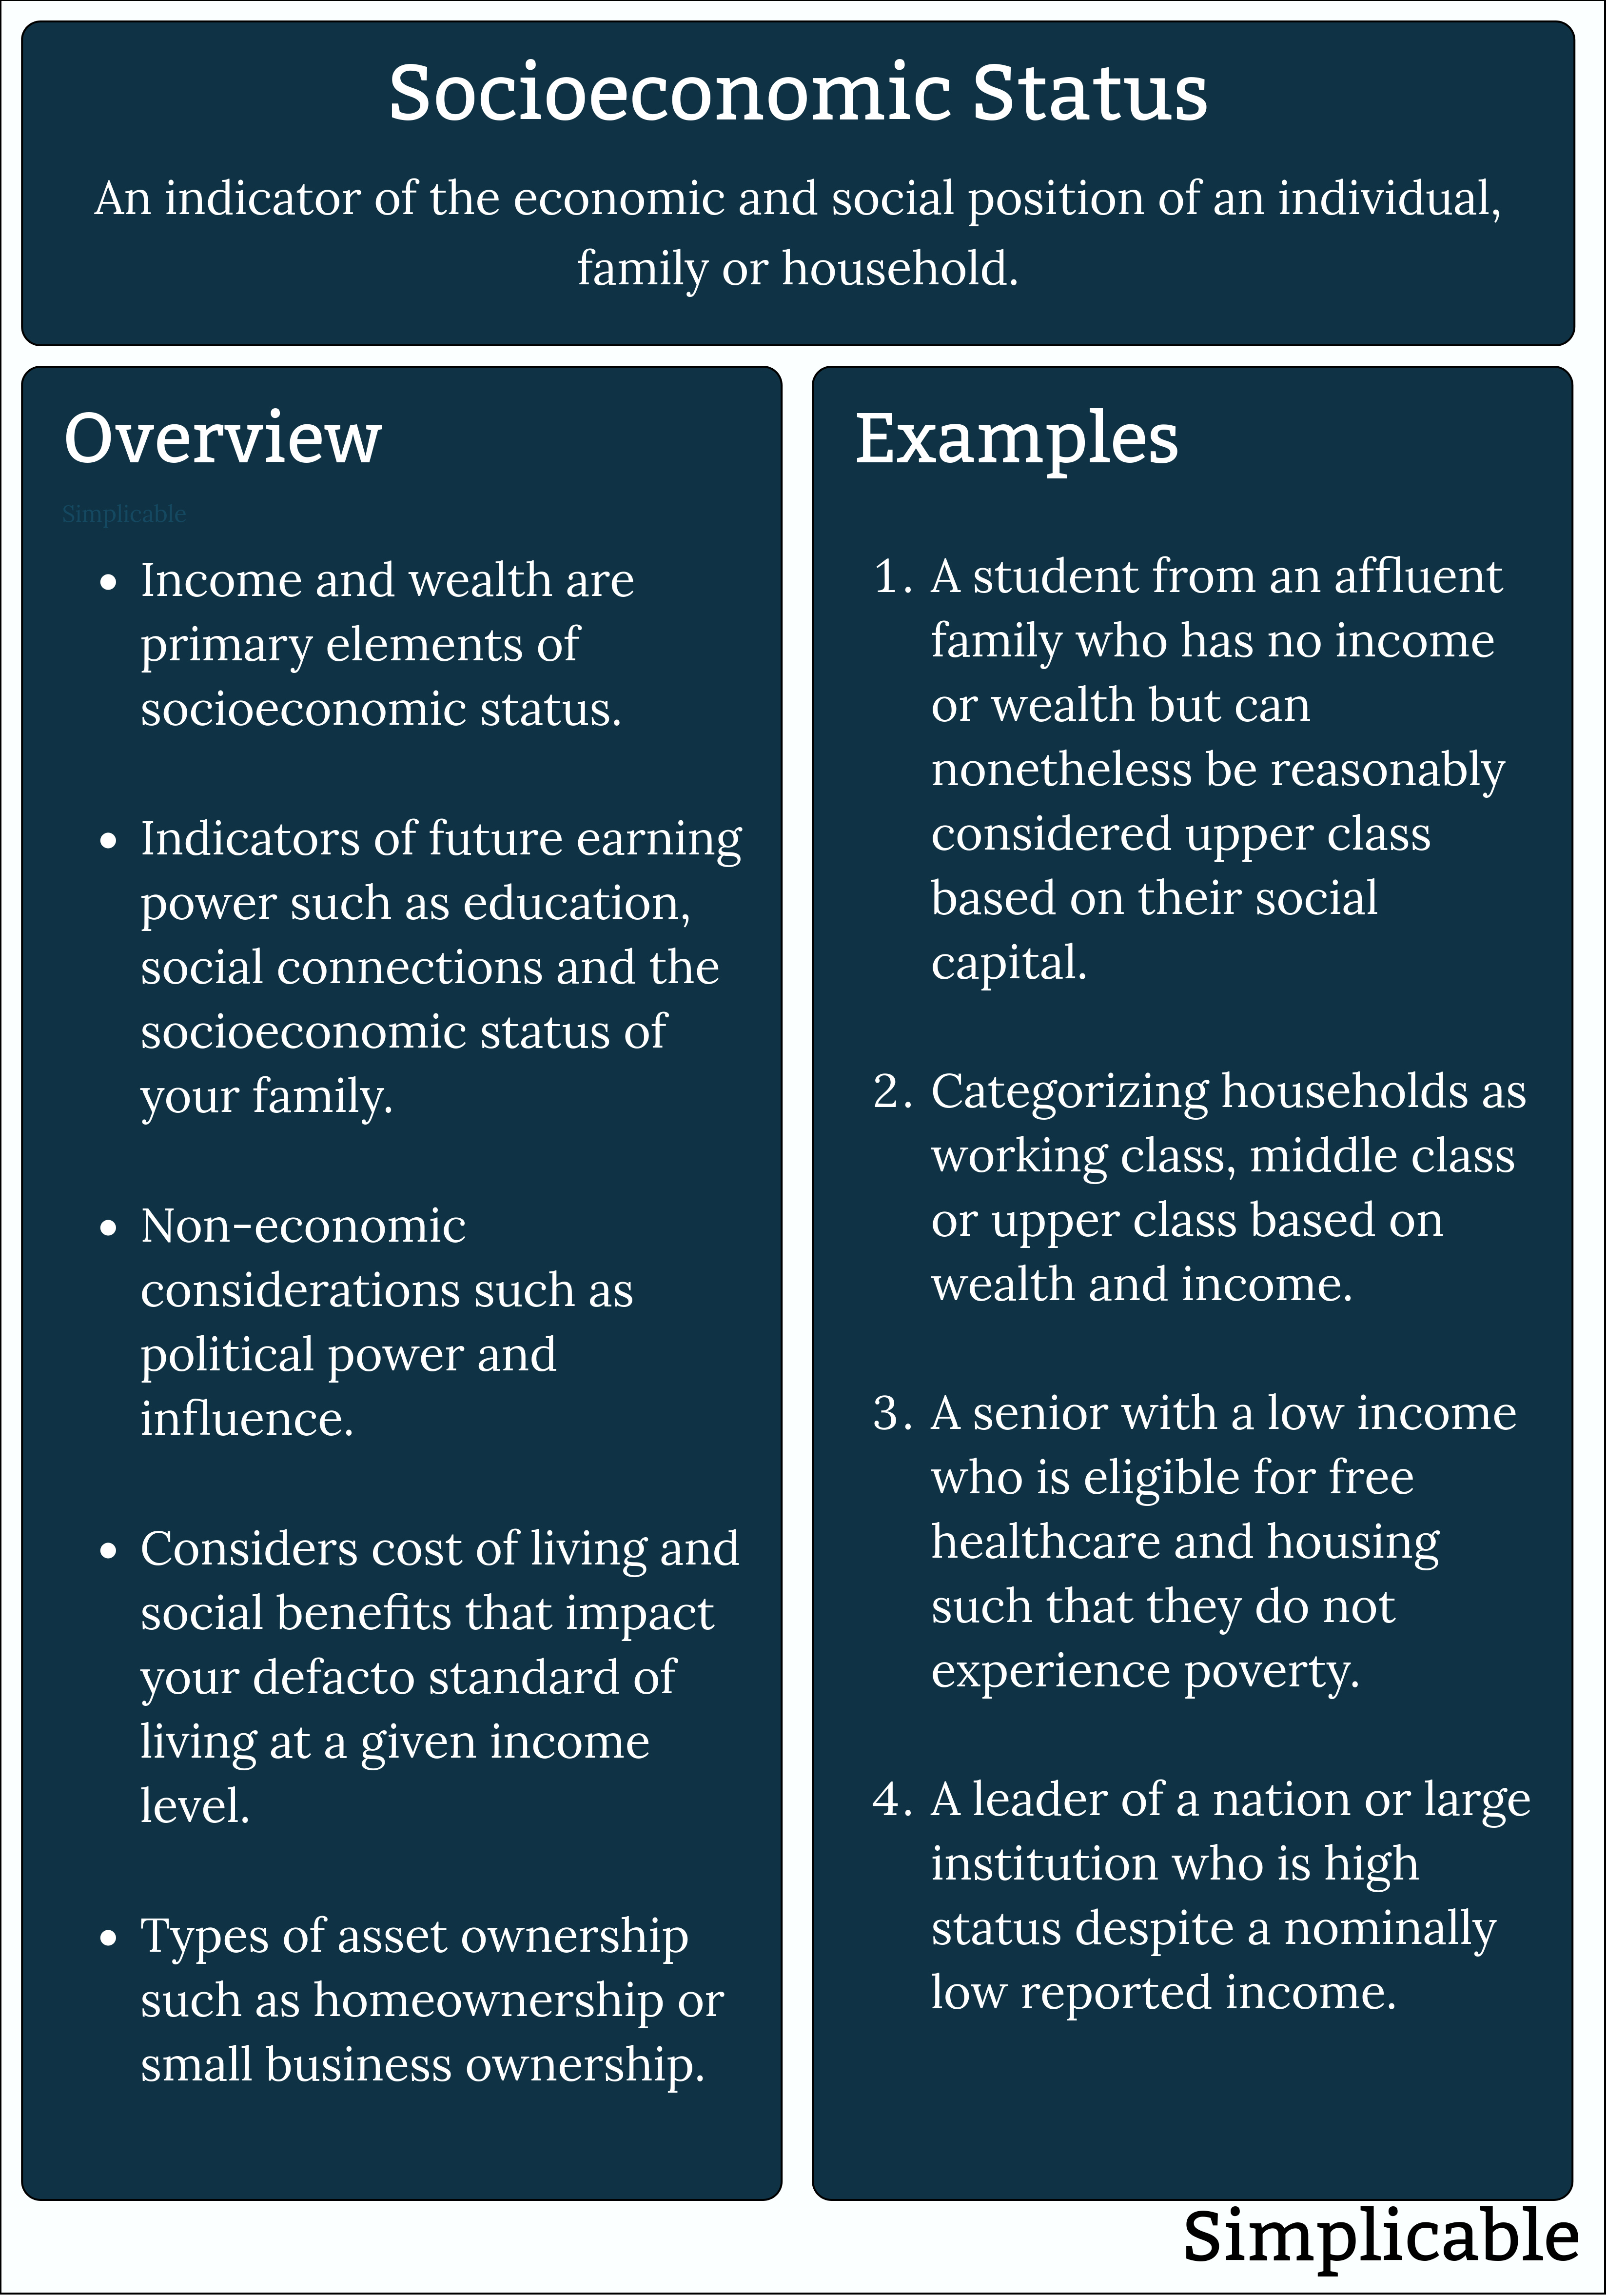 socioeconomic status overview and examples